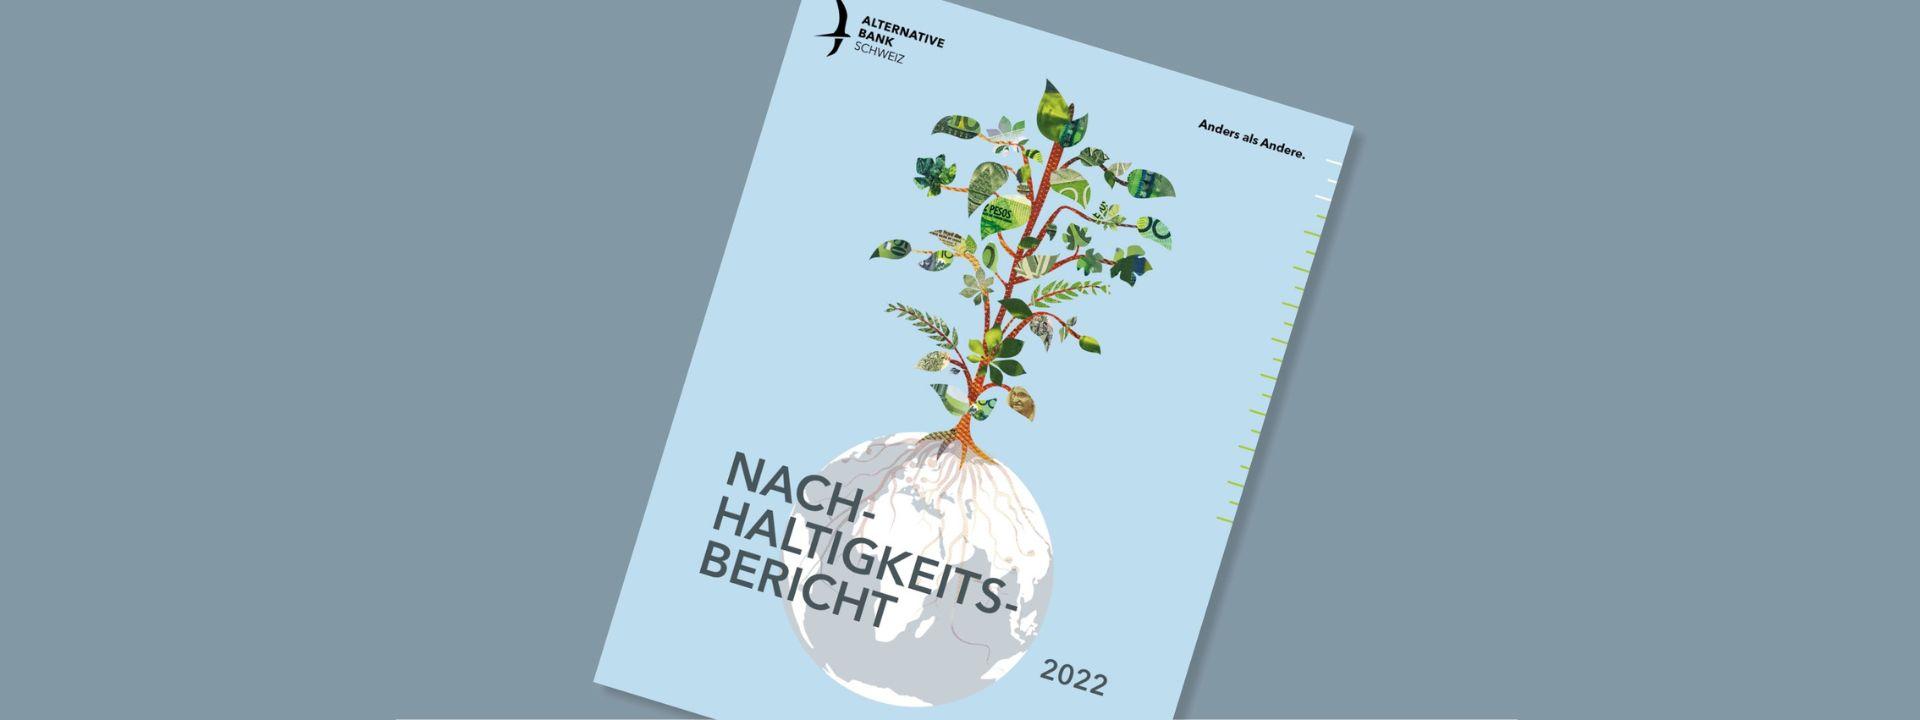 Nachhaltigkeitsbericht 2022 Cover